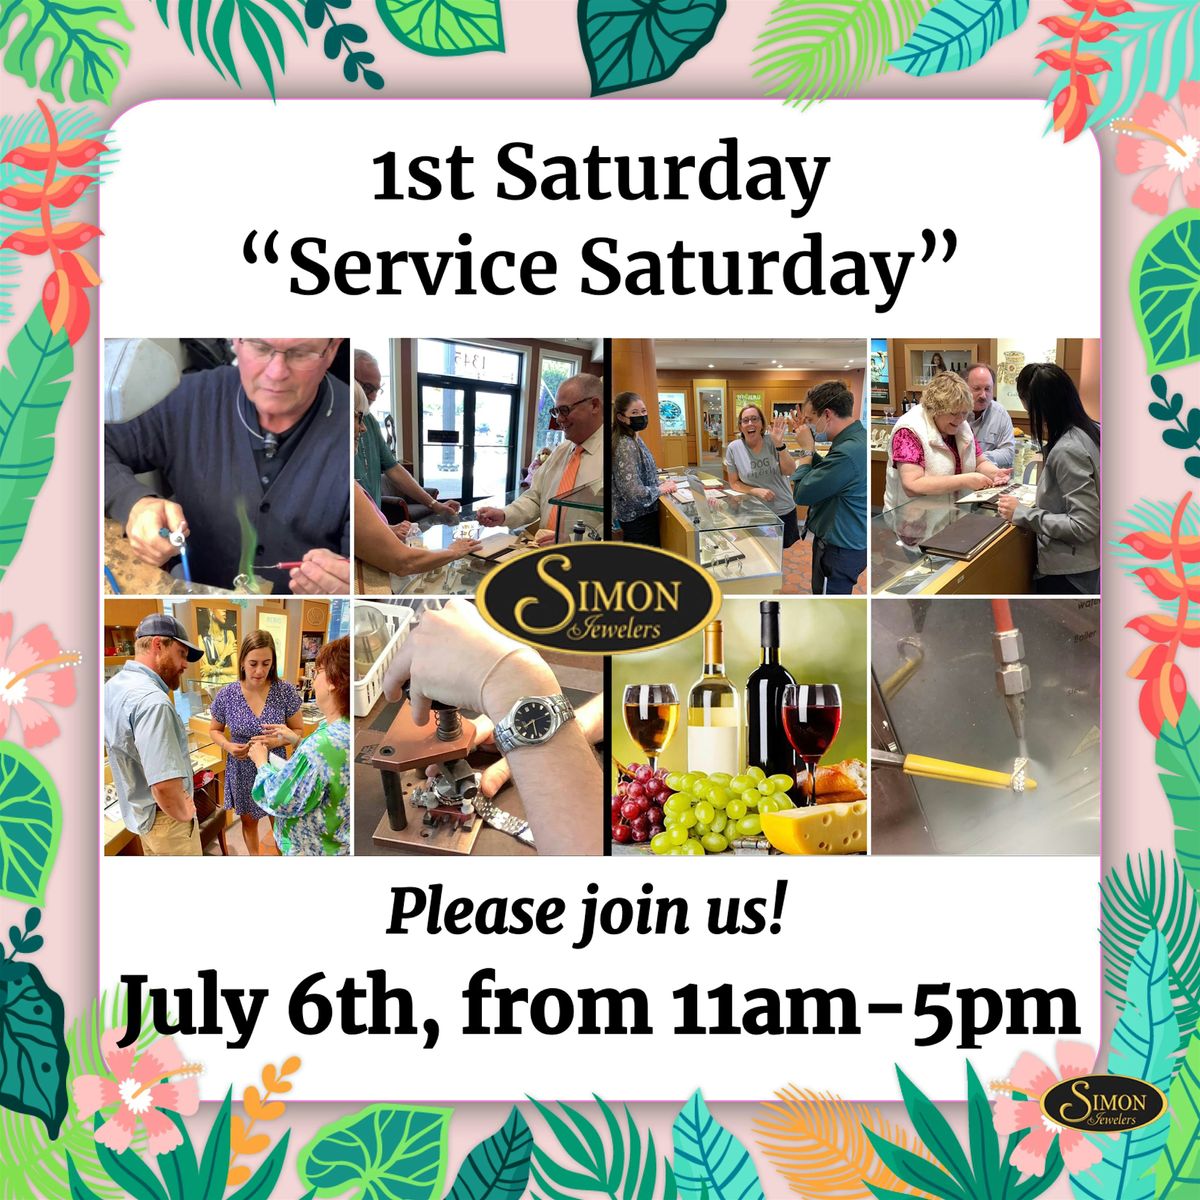 1st Saturday "Service Saturday" Event